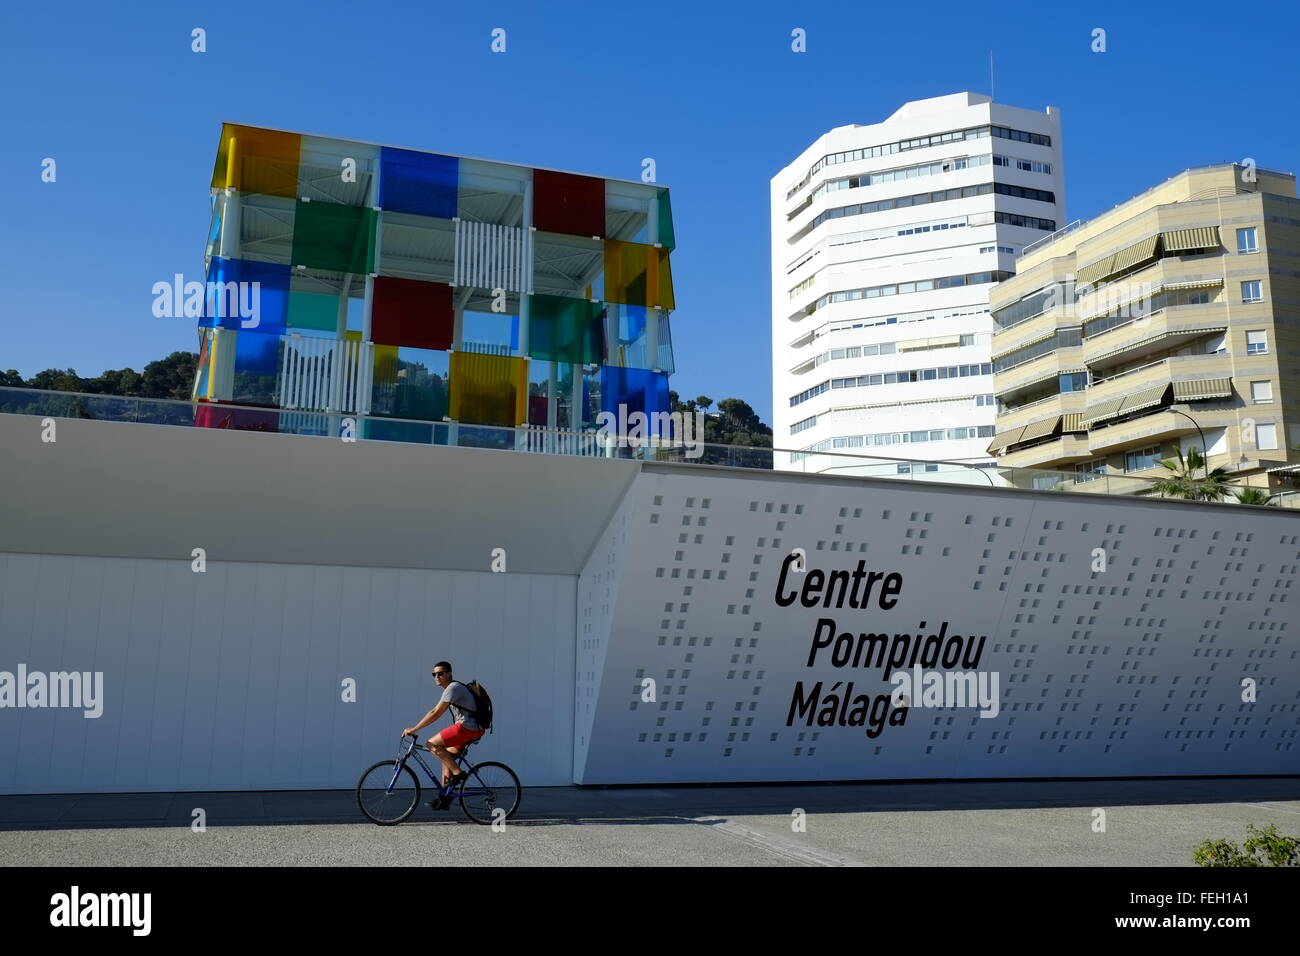 Pompidou Centre. Malaga, Andalusia. Spain Stock Photo